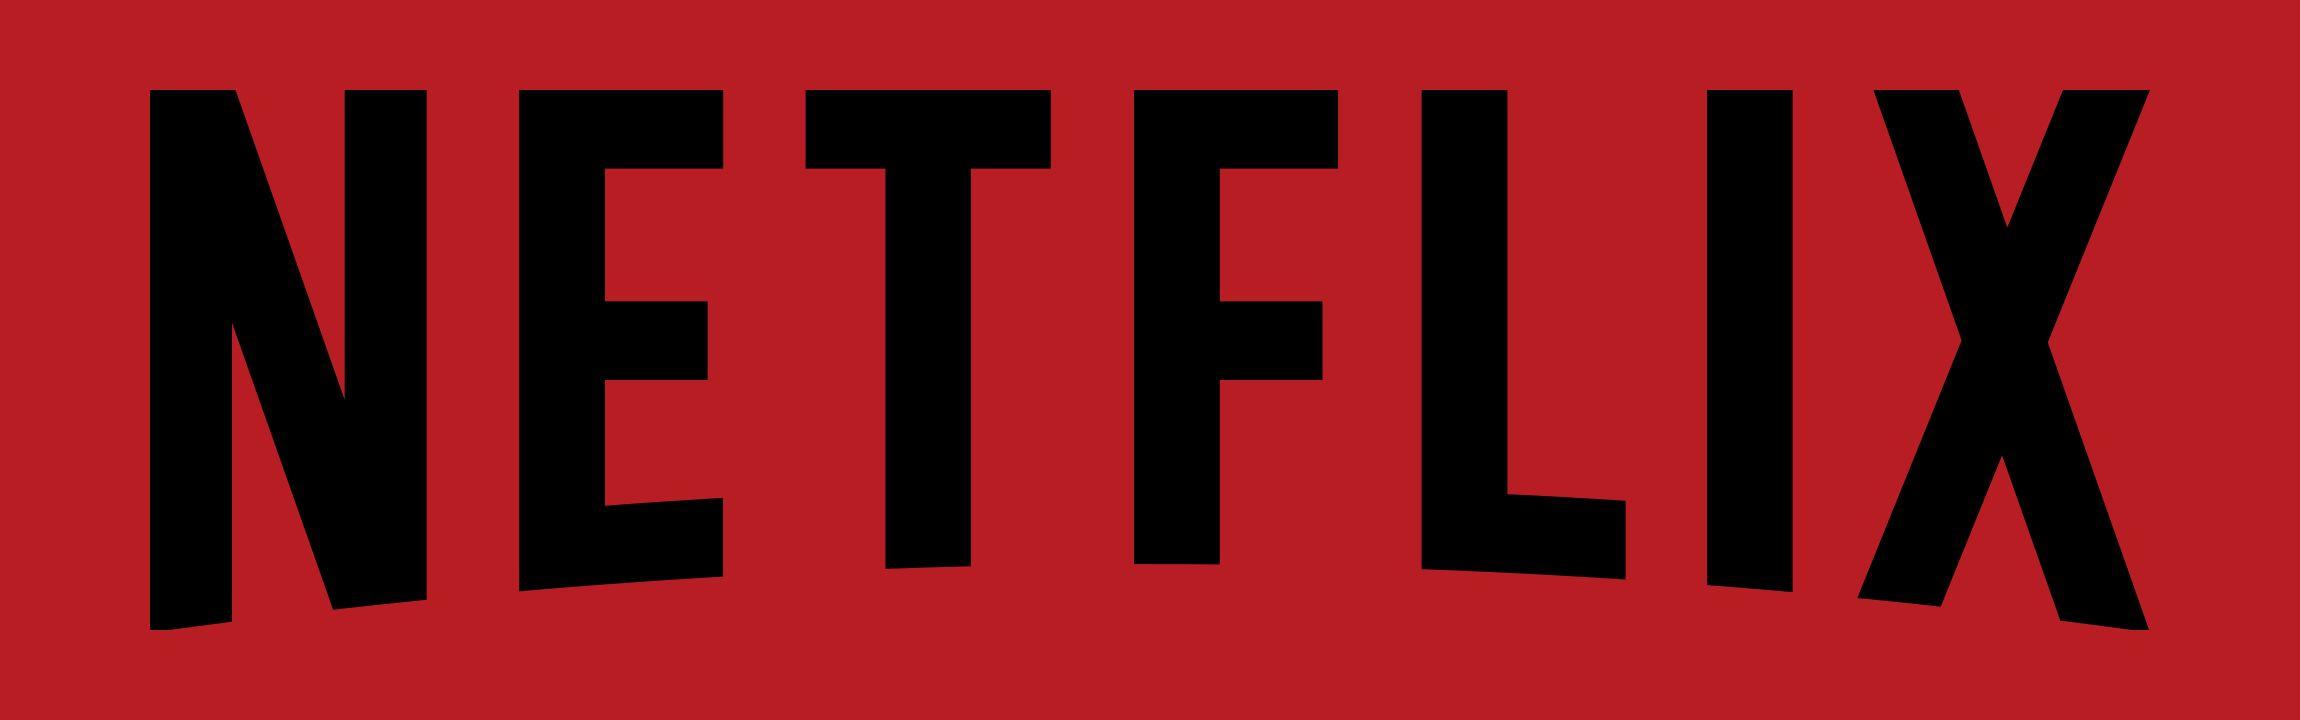 Netflex Logo - Netflix Logo, Netflix Symbol, Meaning, History and Evolution